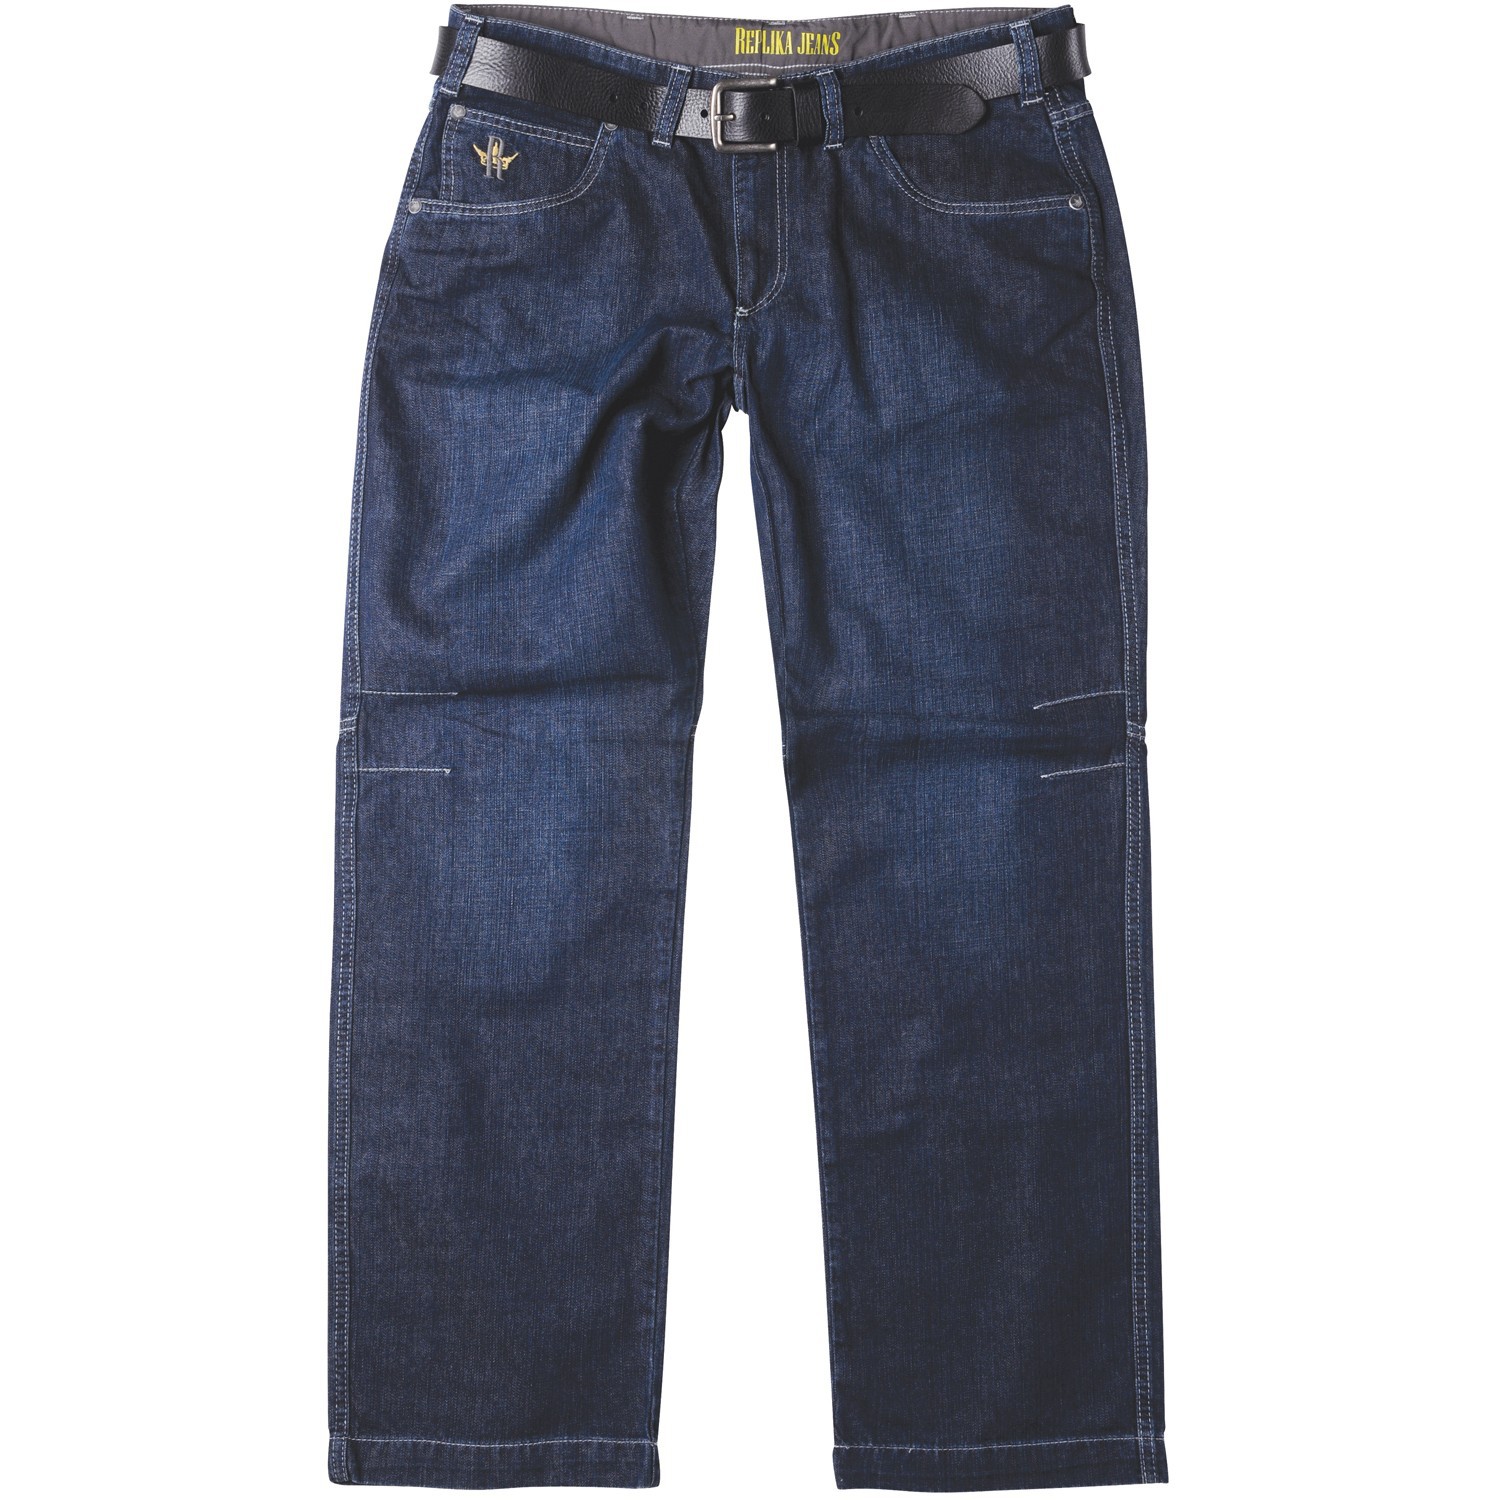 Jeans in blue by Replika in plus sizes until 70